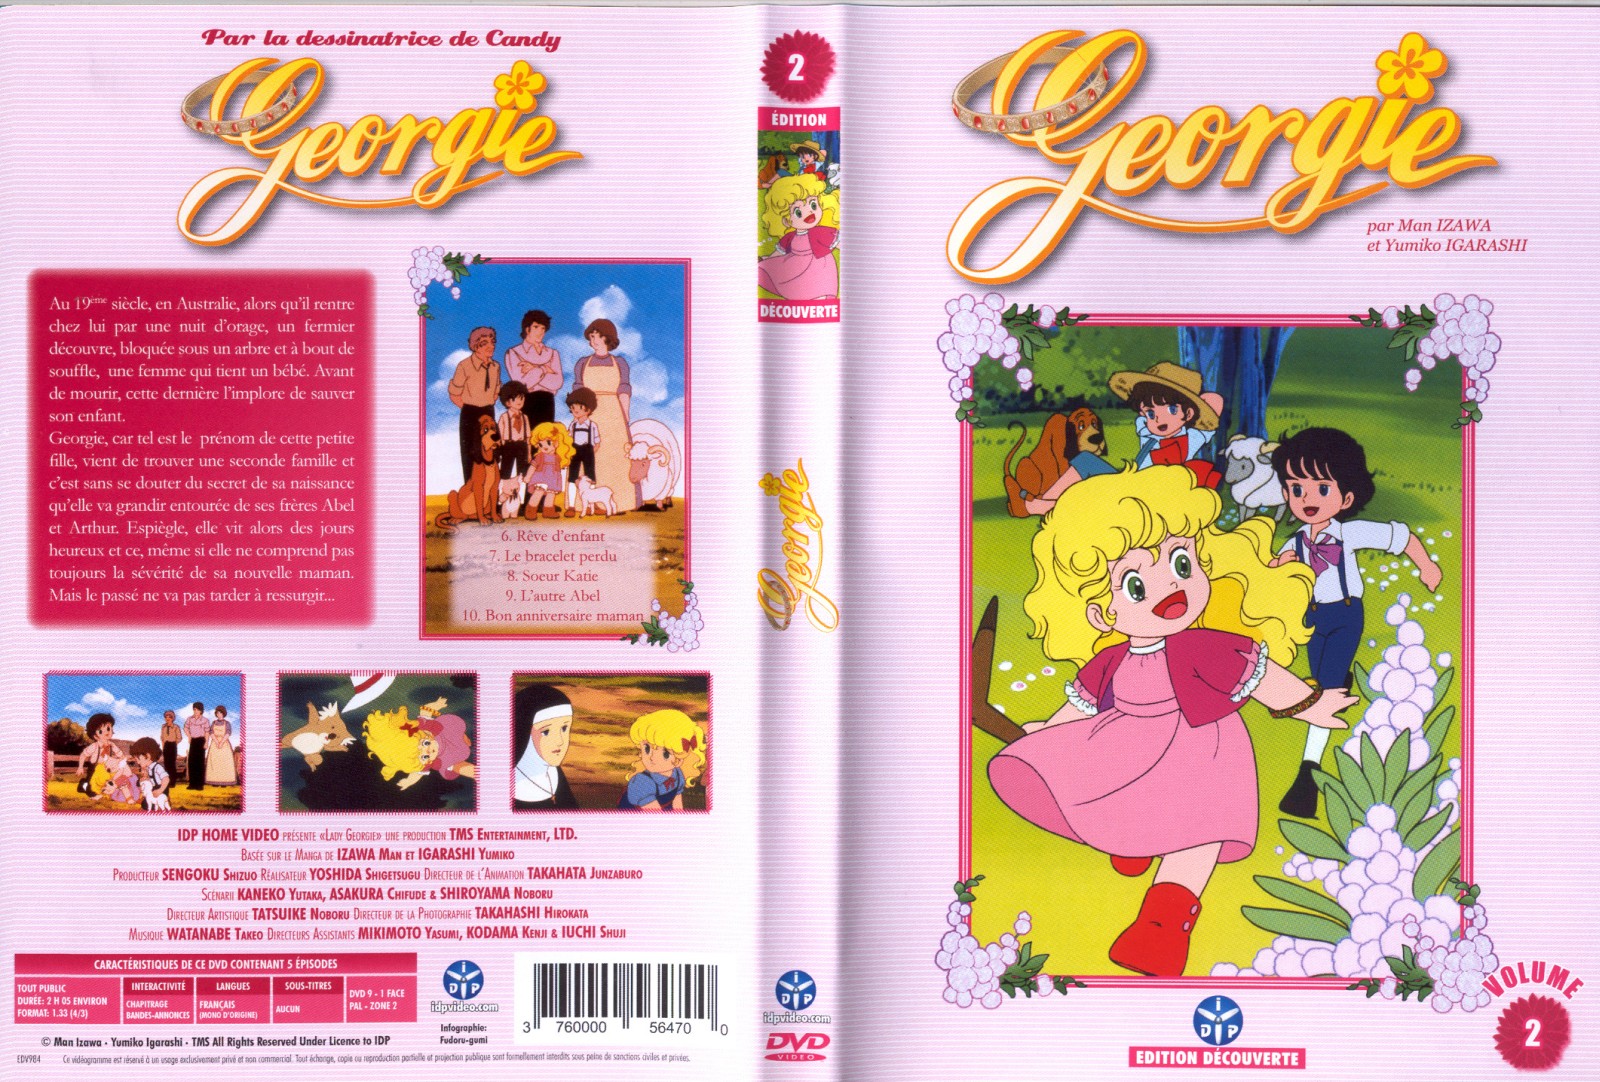 Jaquette DVD Georgie vol 2